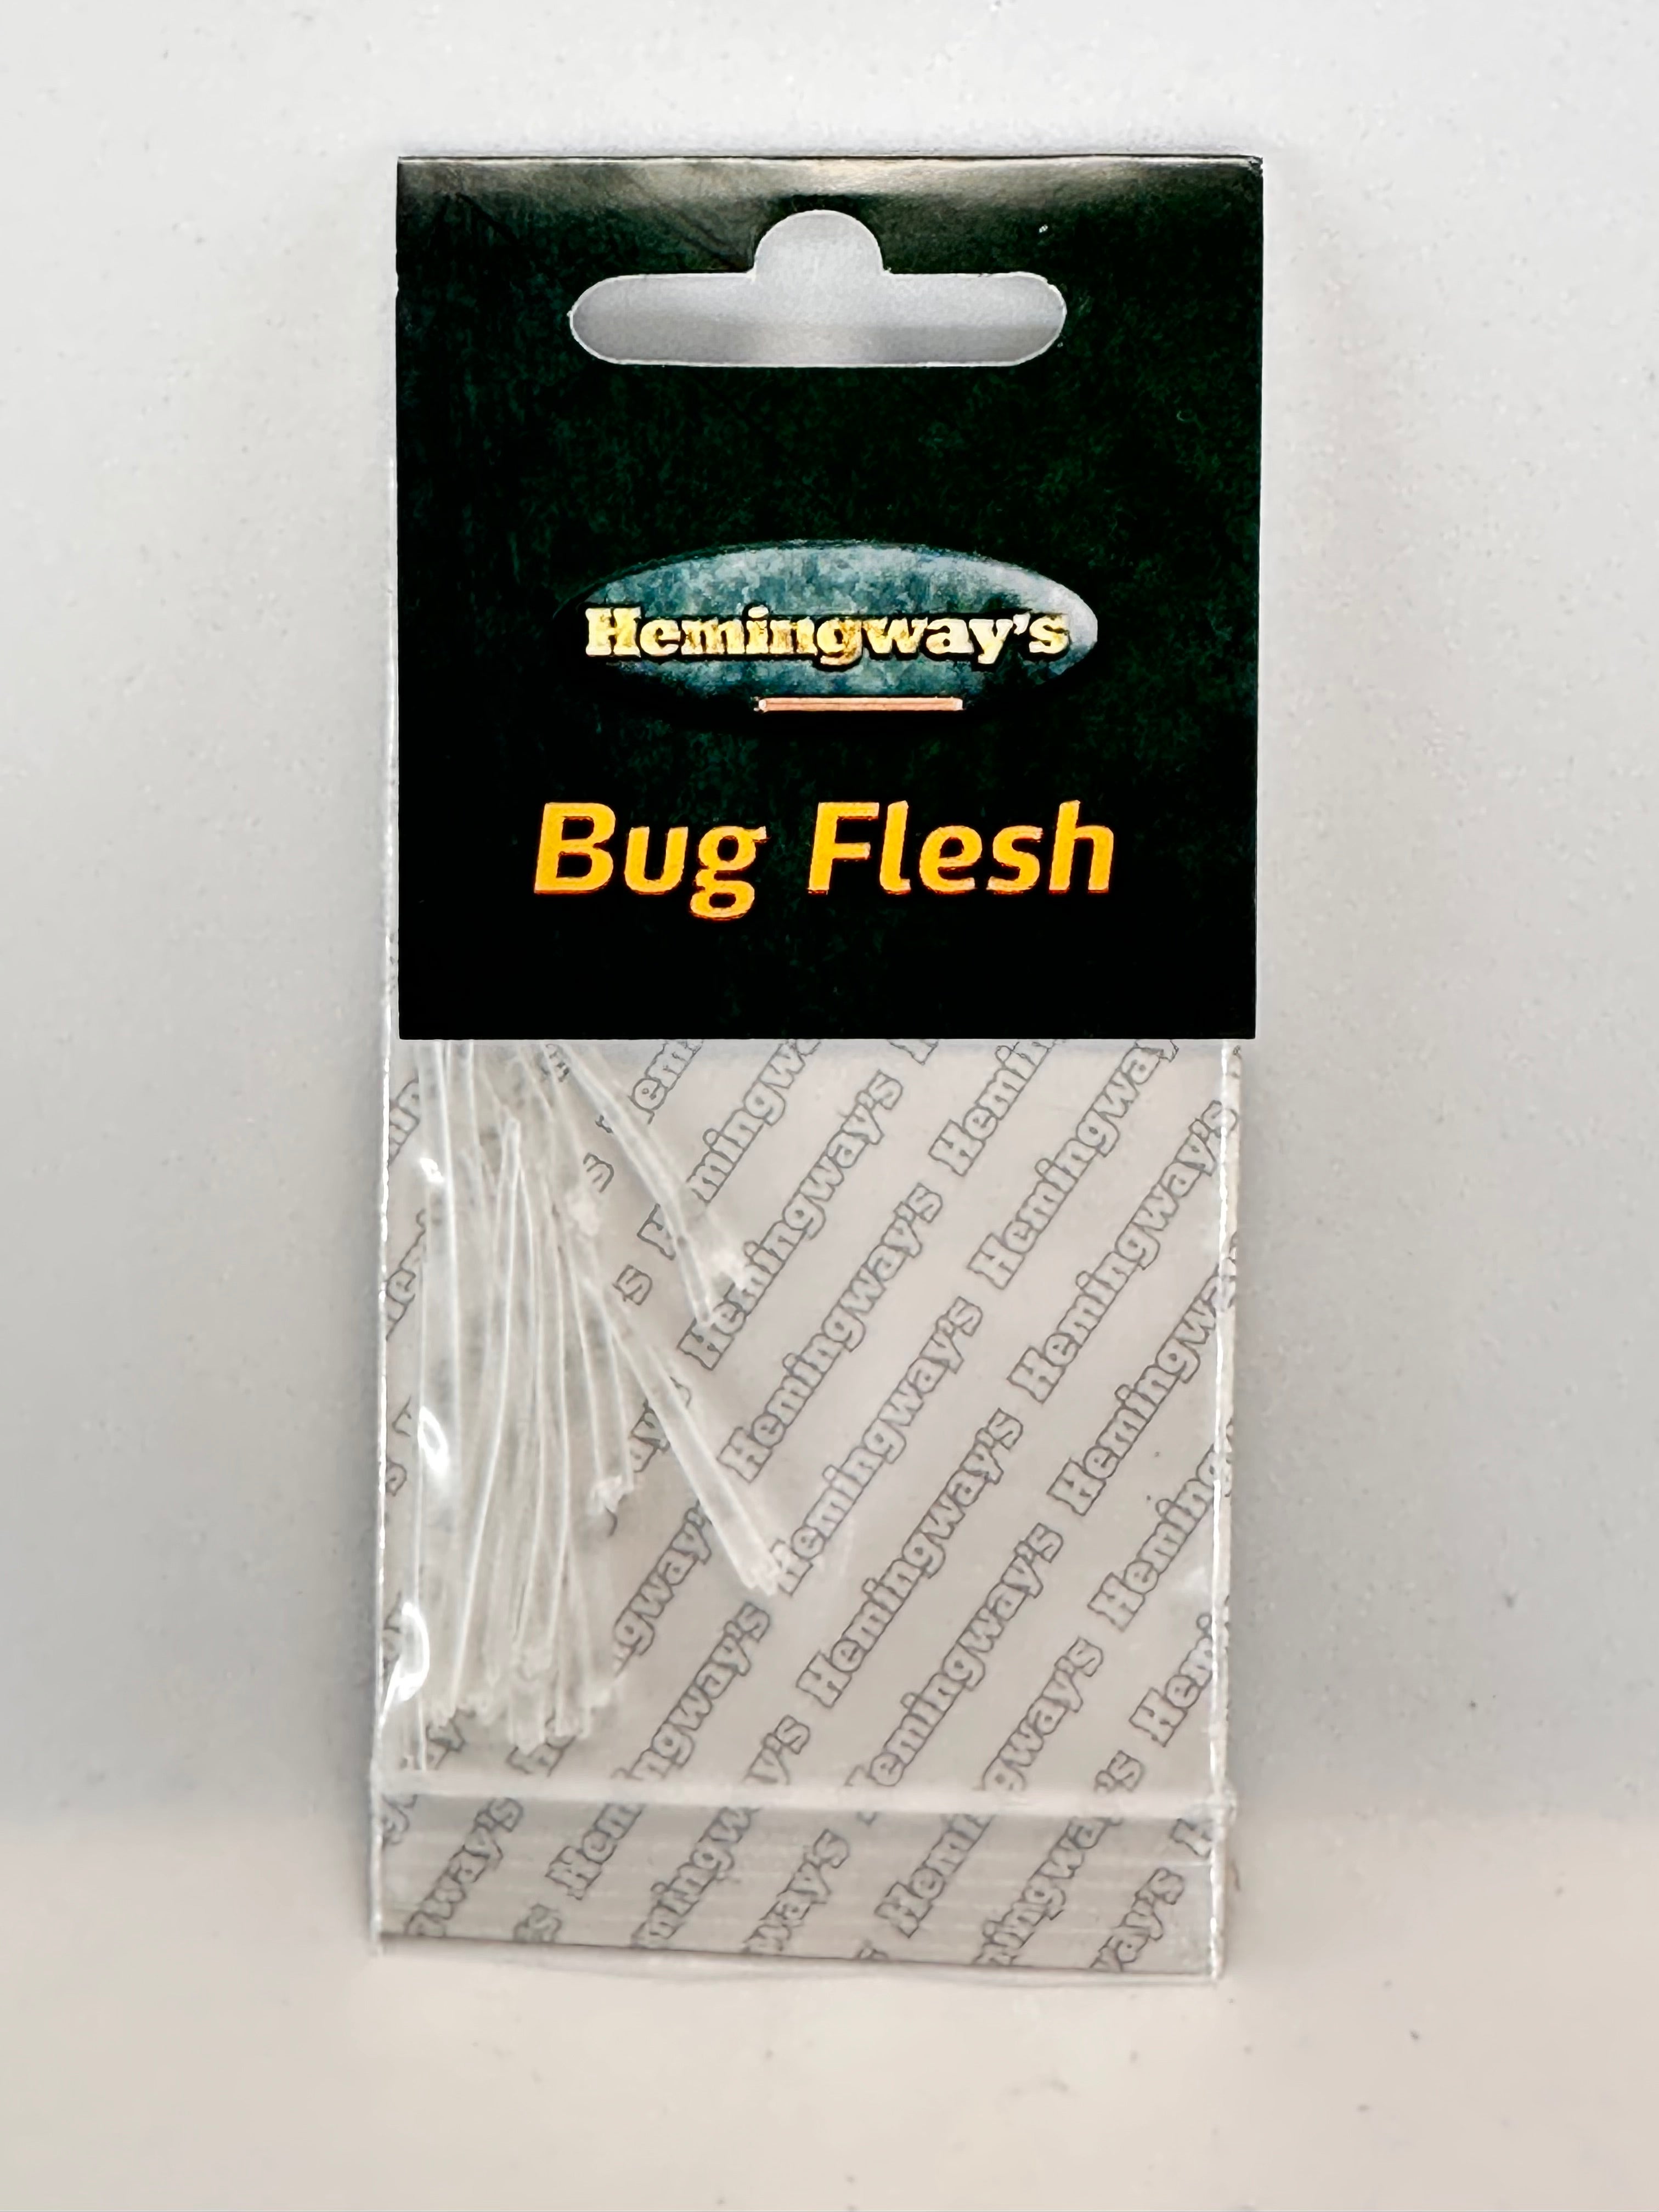 Hemingway's Bug Flesh